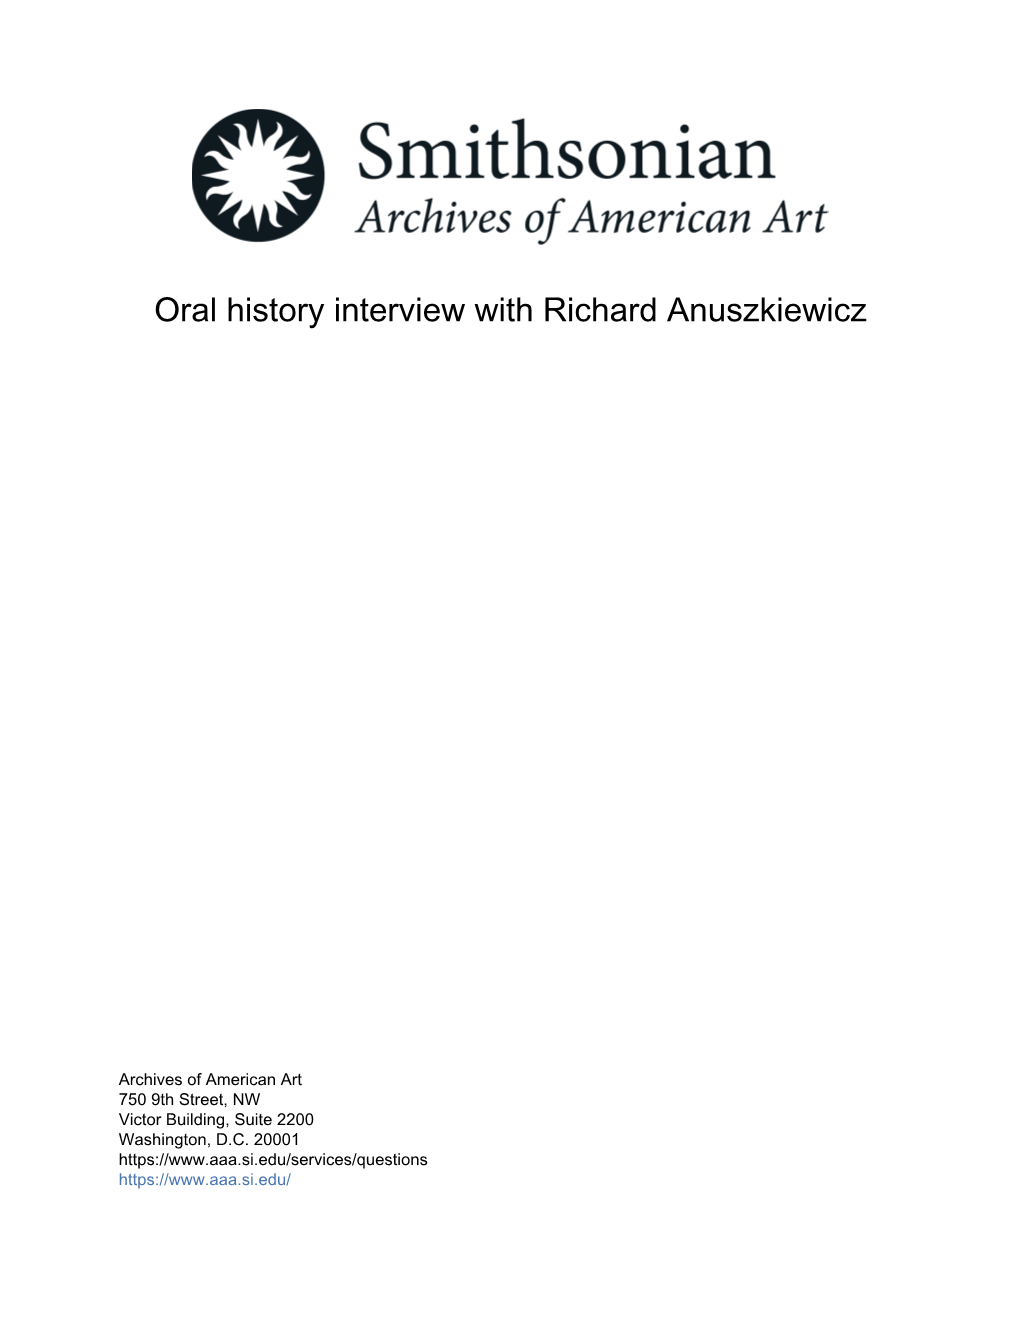 Oral History Interview with Richard Anuszkiewicz